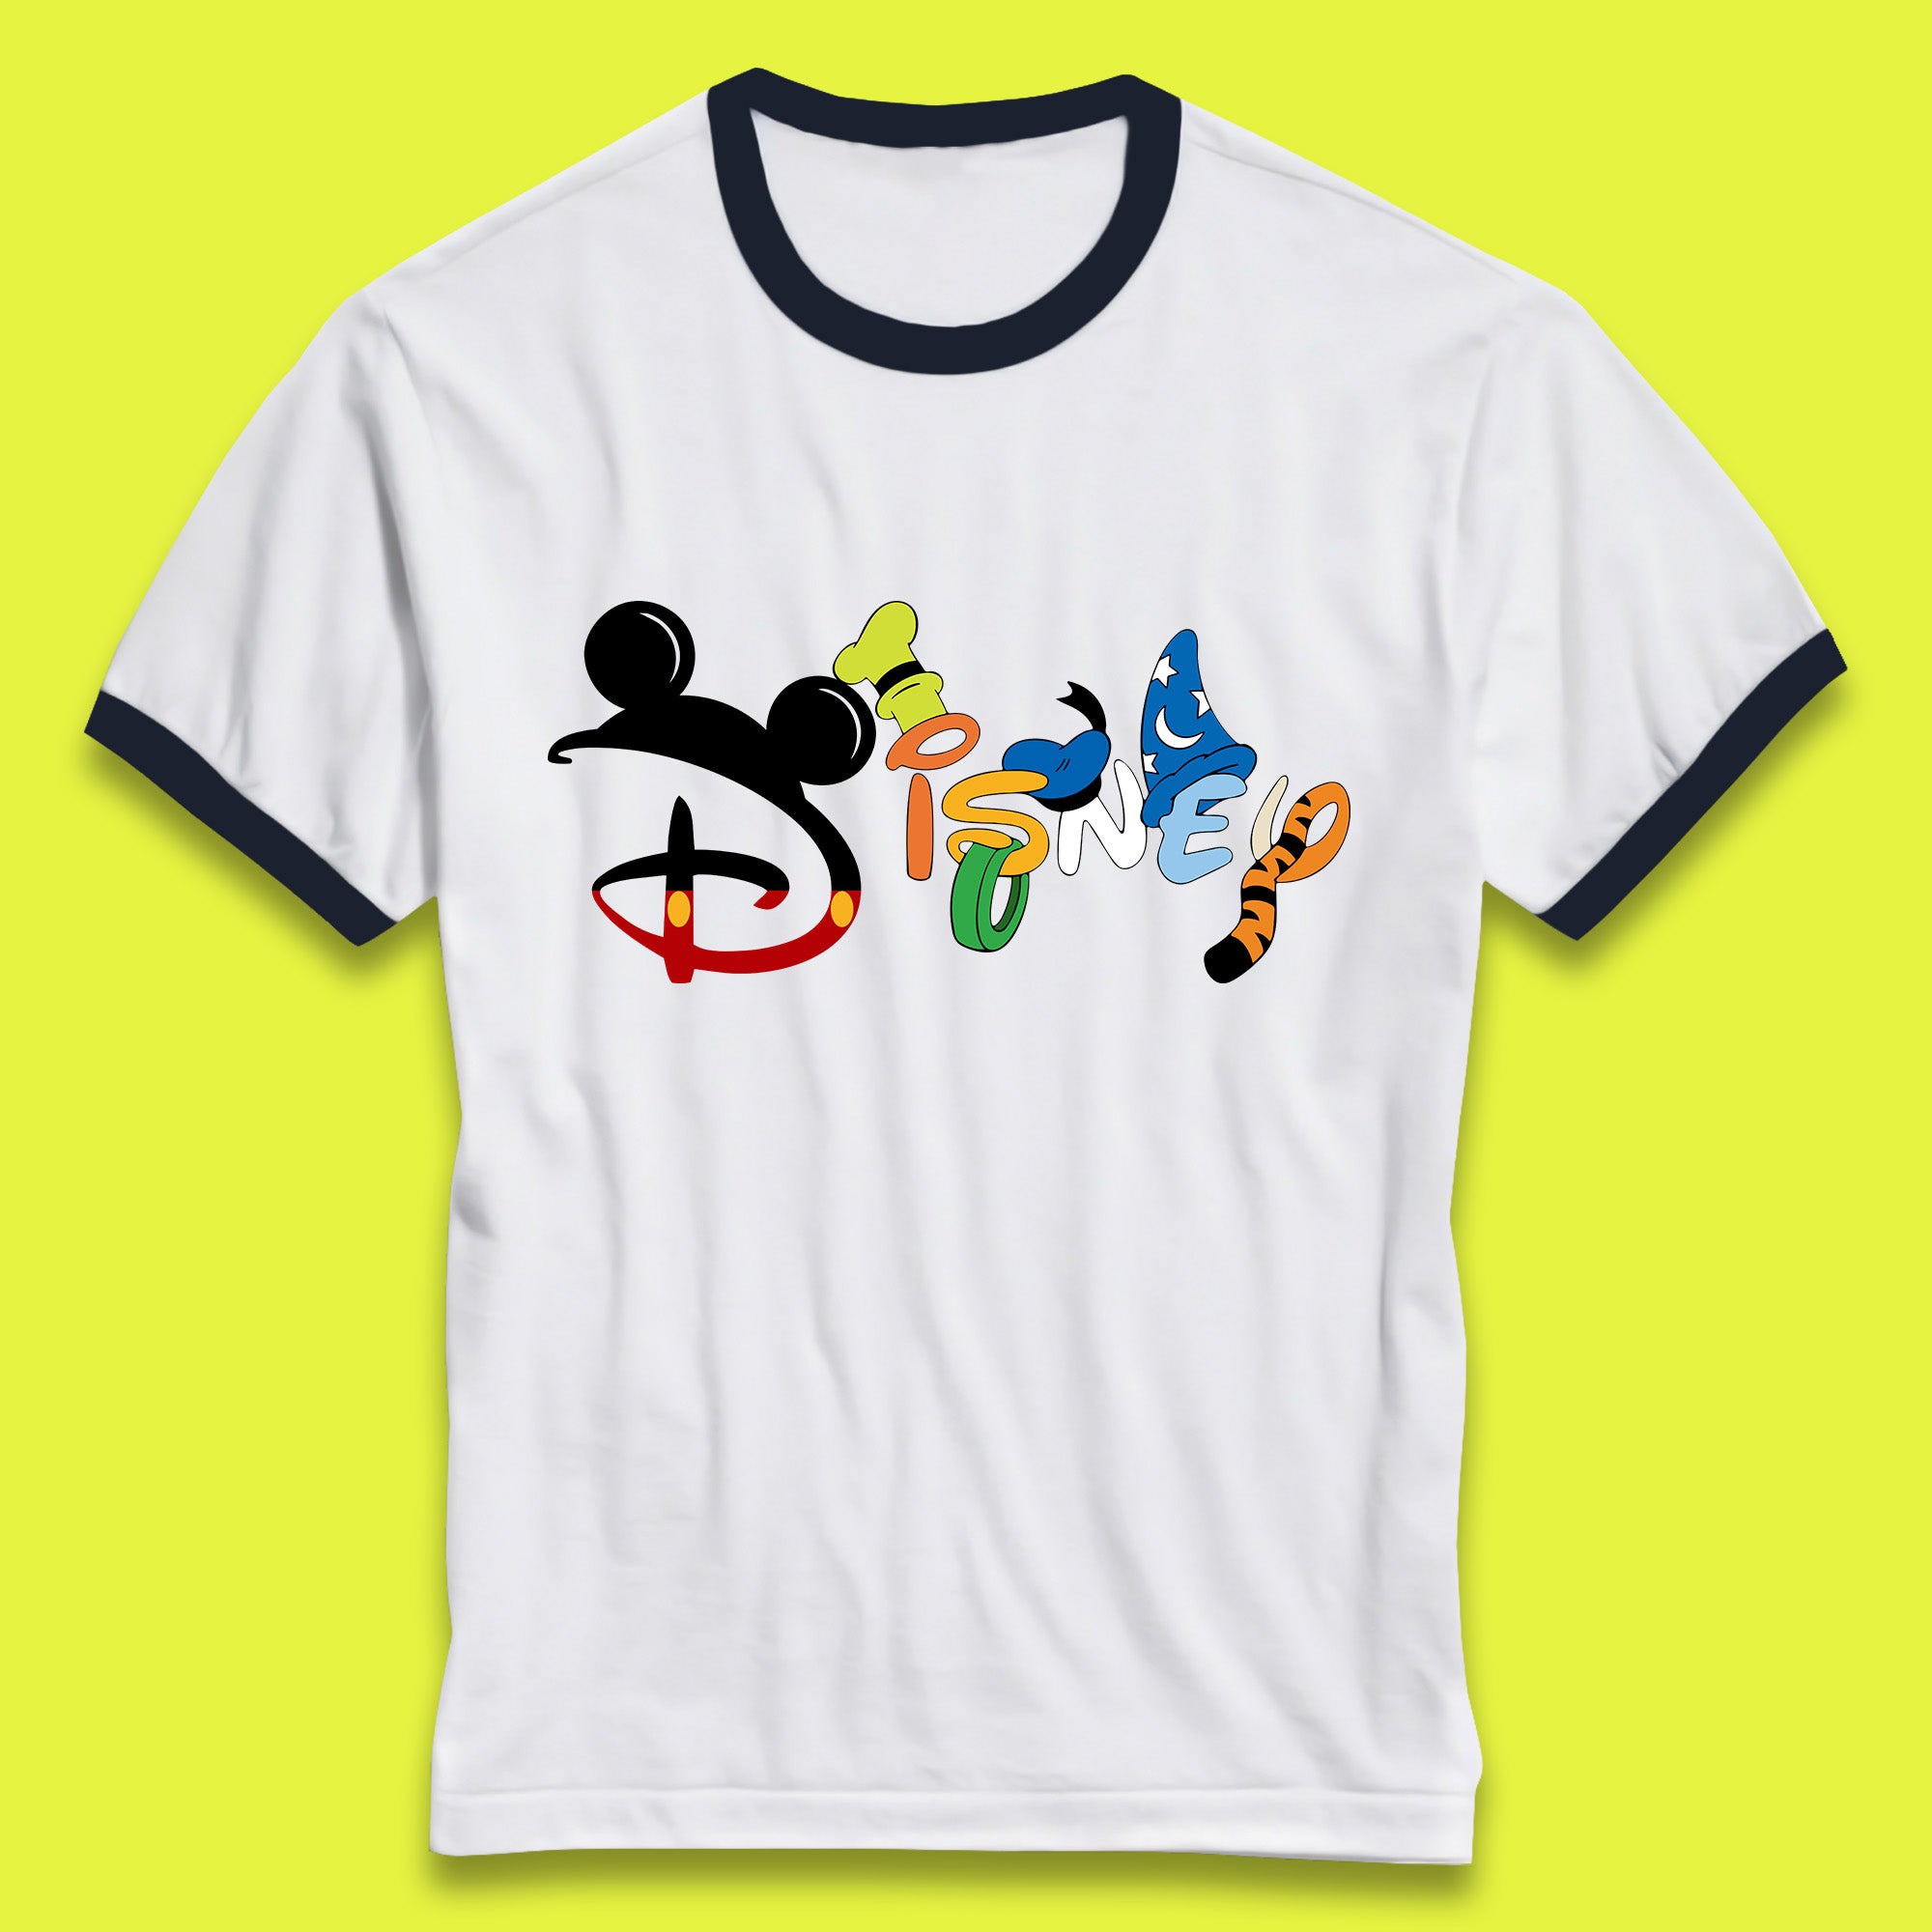 Disney Club Cartoon Characters Mickey Mouse Minnie Mouse Donald Duck Pluto Goofy Sorcerer Mickey Hat Tigger Disney World Trip Ringer T Shirt